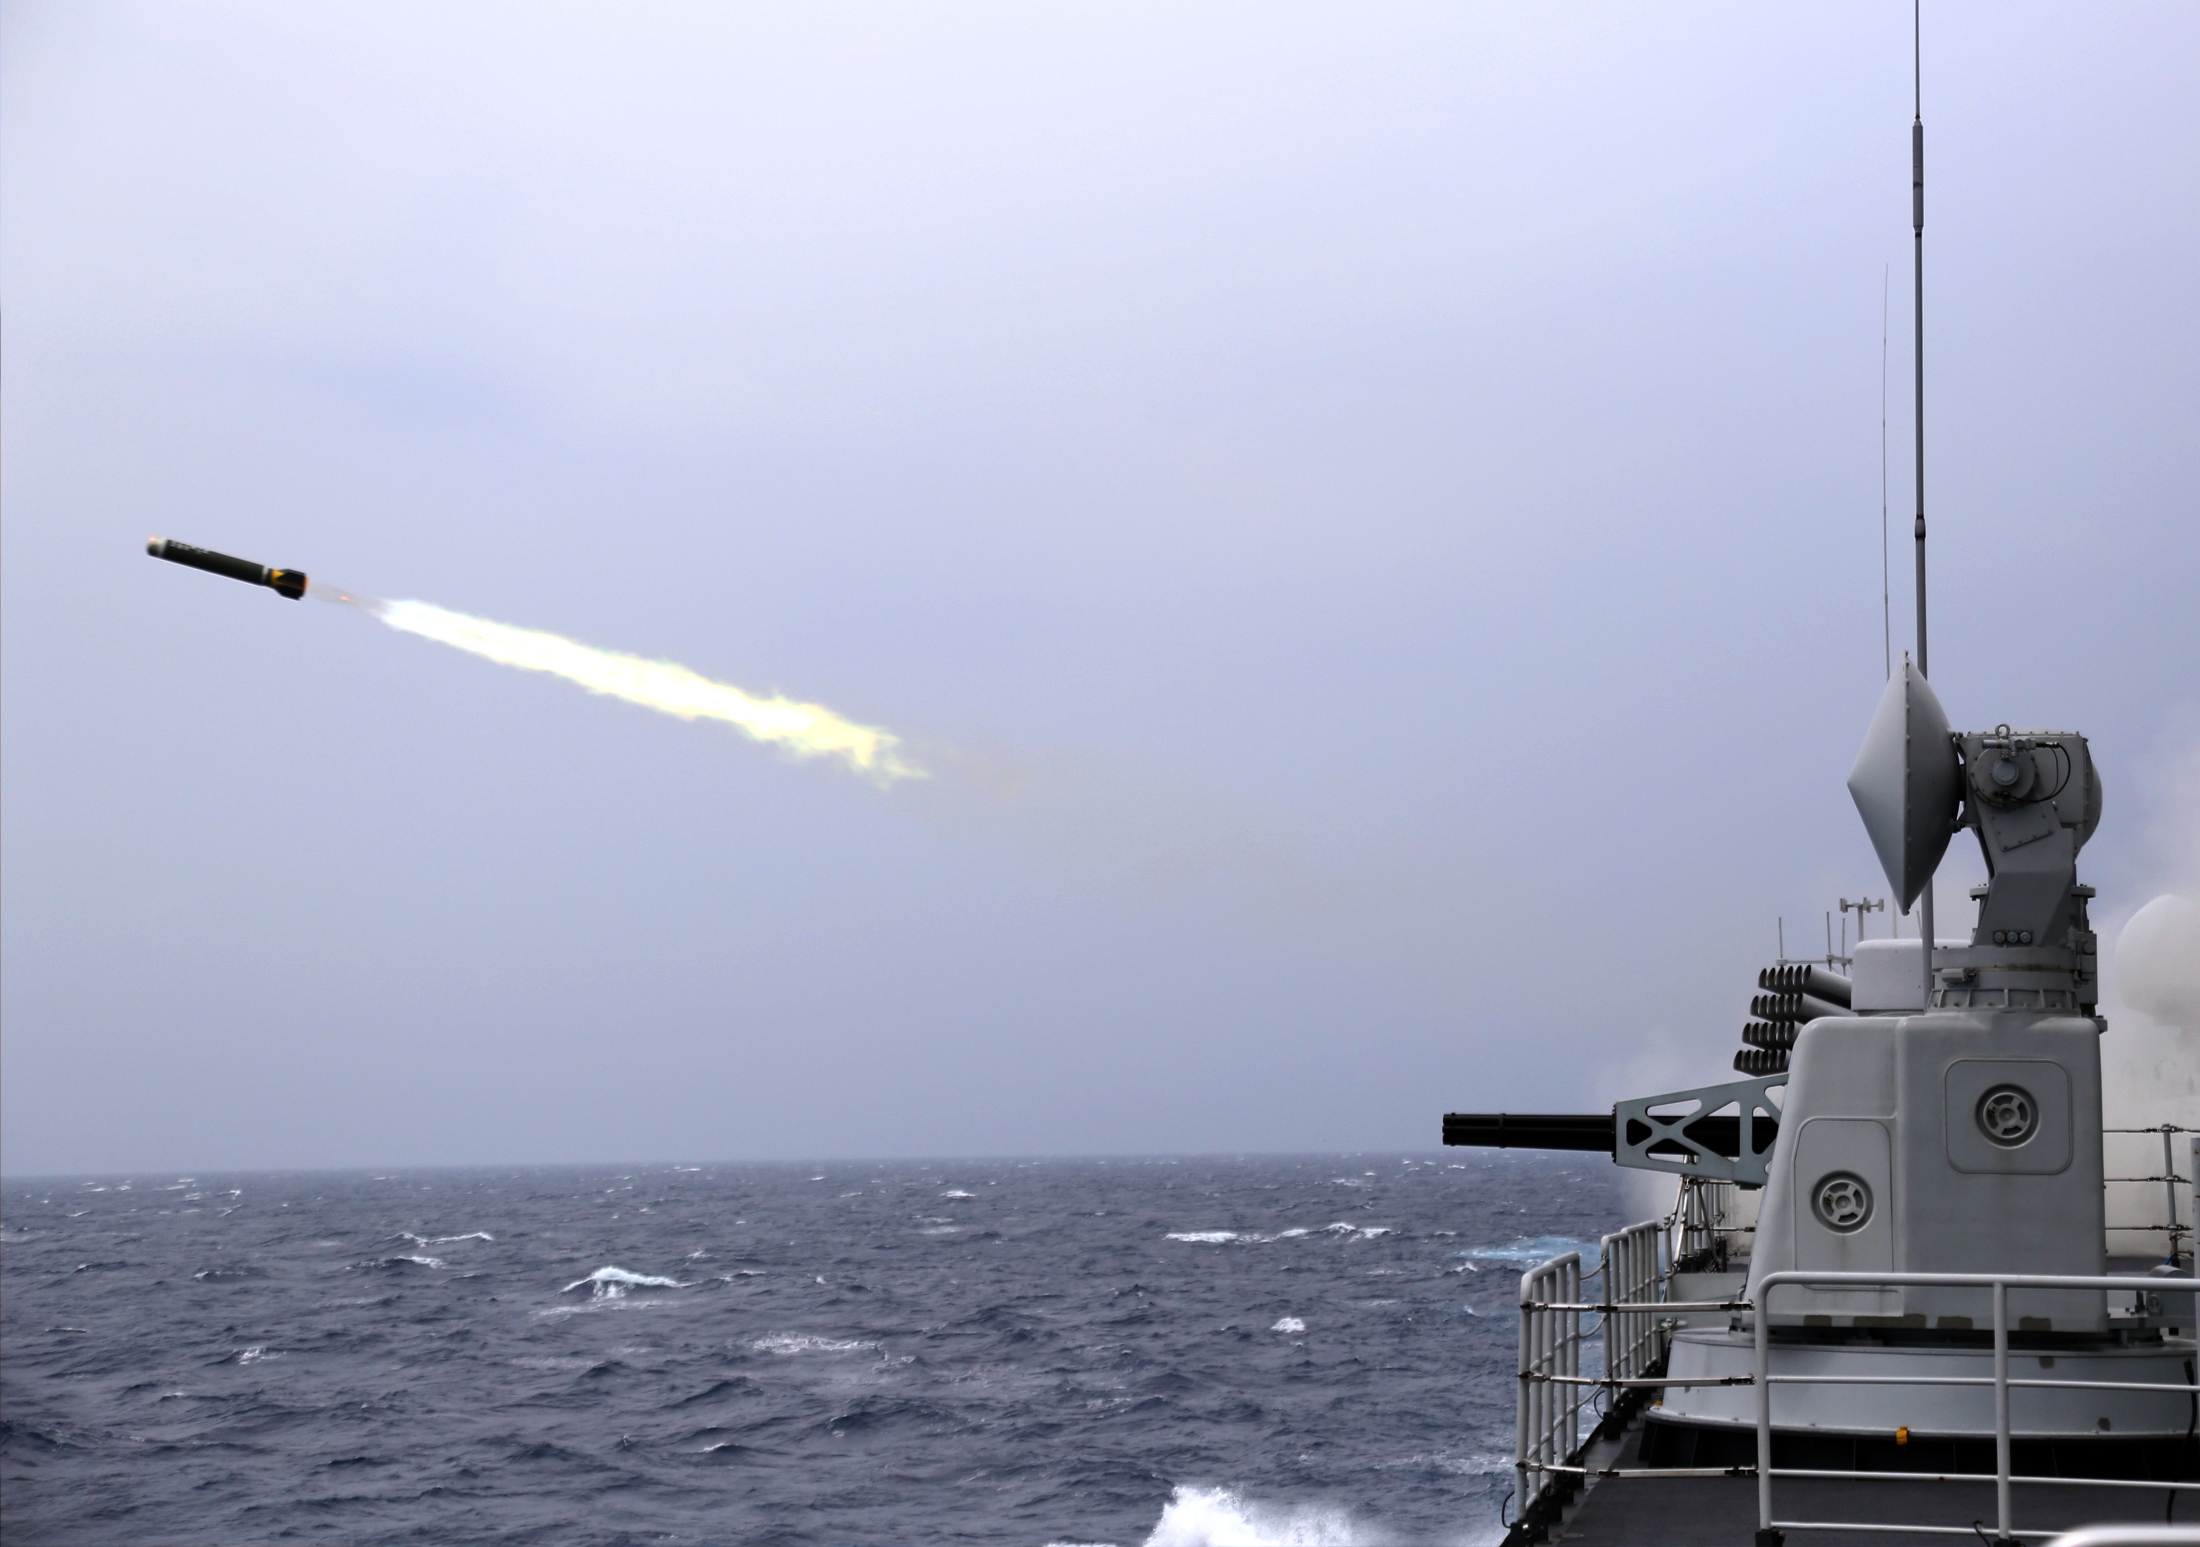 Destroyer fires main gun at night in South China Sea – China Defense ...